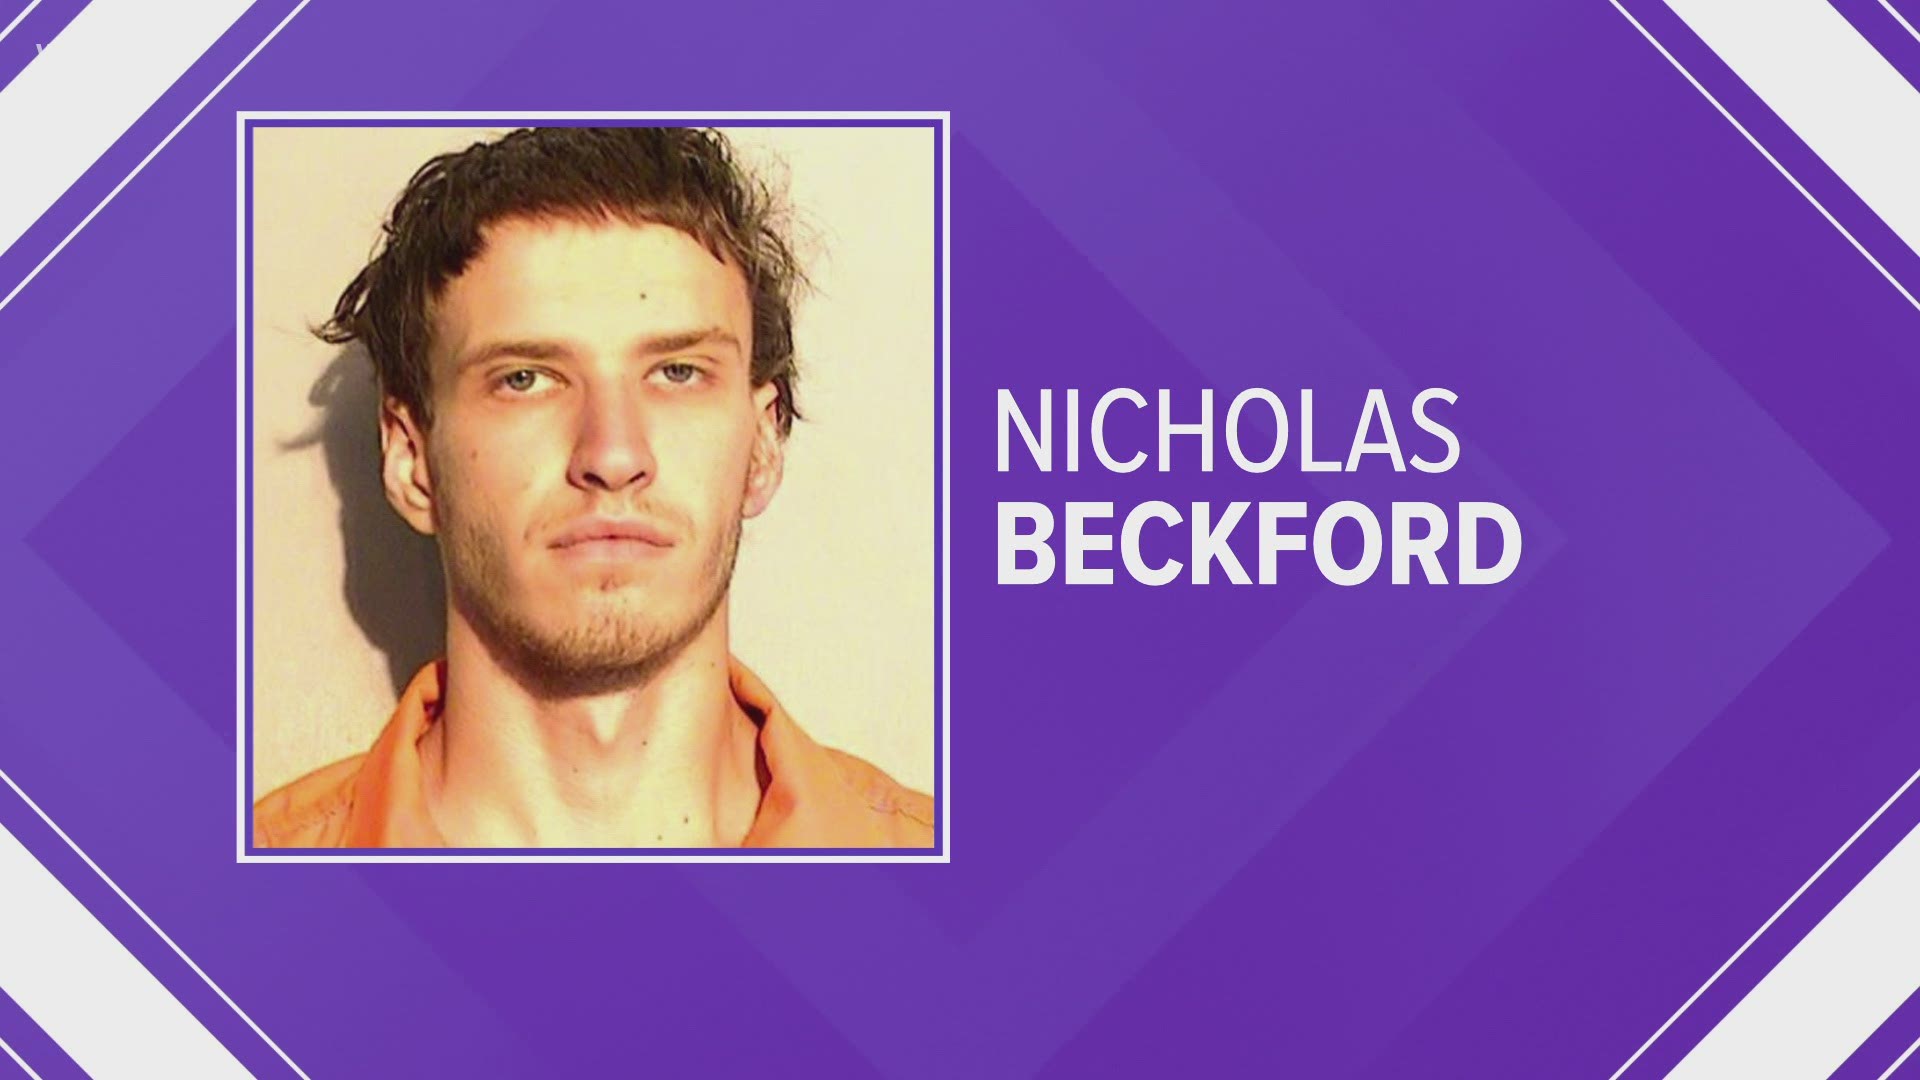 Nicholas Beckford is accused of shaking his son, causing fatal abusive head trauma.